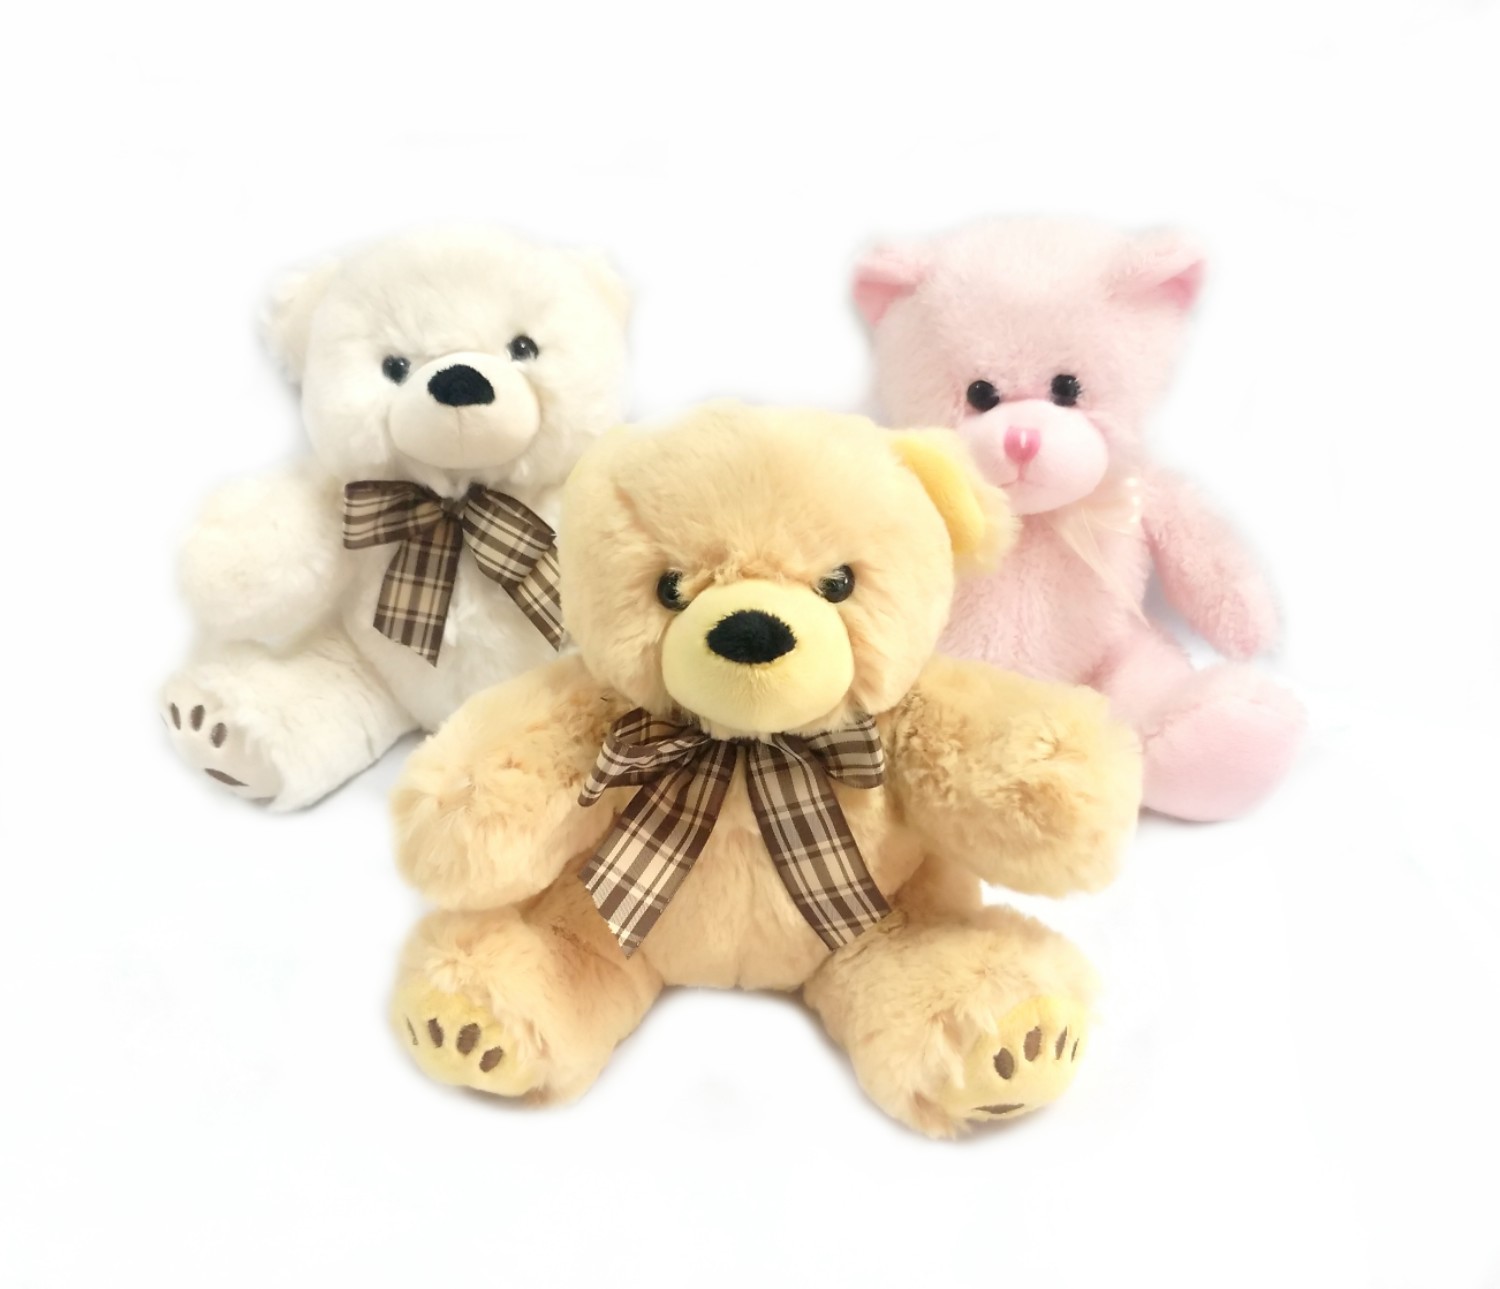 Brown long soft fluff teddy bear stuffed plush toys 